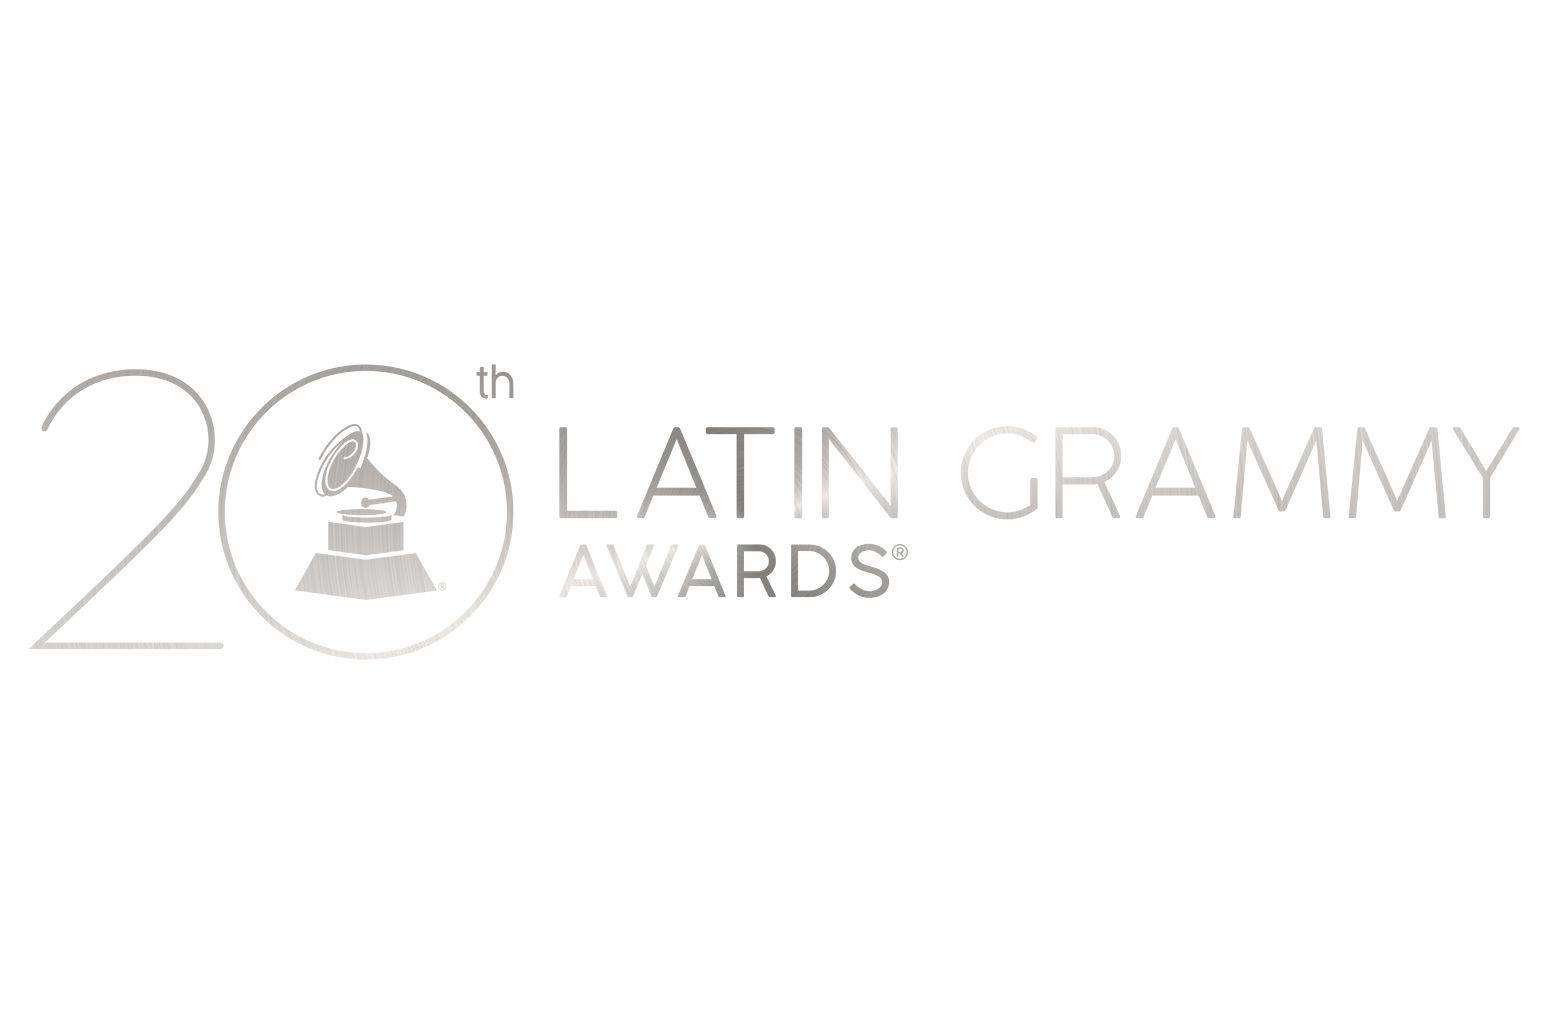 Grammys Logo - Latin Grammys 2019: The Latin Recording Academy Reveals New Awards ...